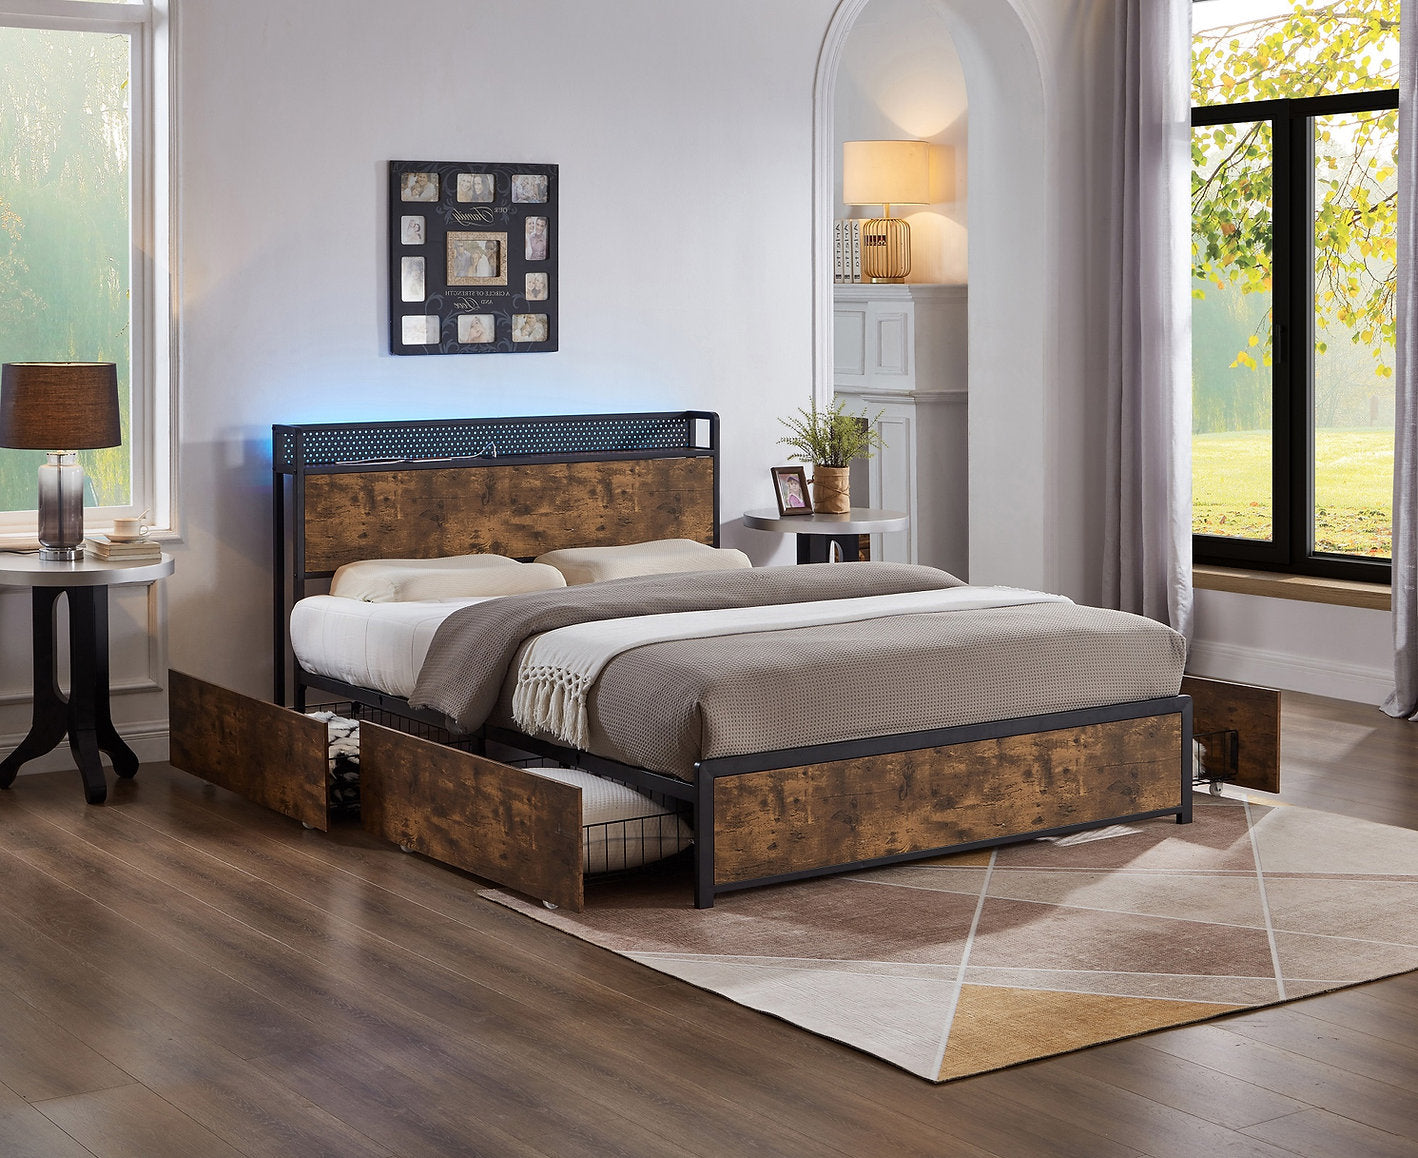 IF-5930 Bed, Wood Grain Panels and Metal Frame, LED Lights, USB Charging Ports